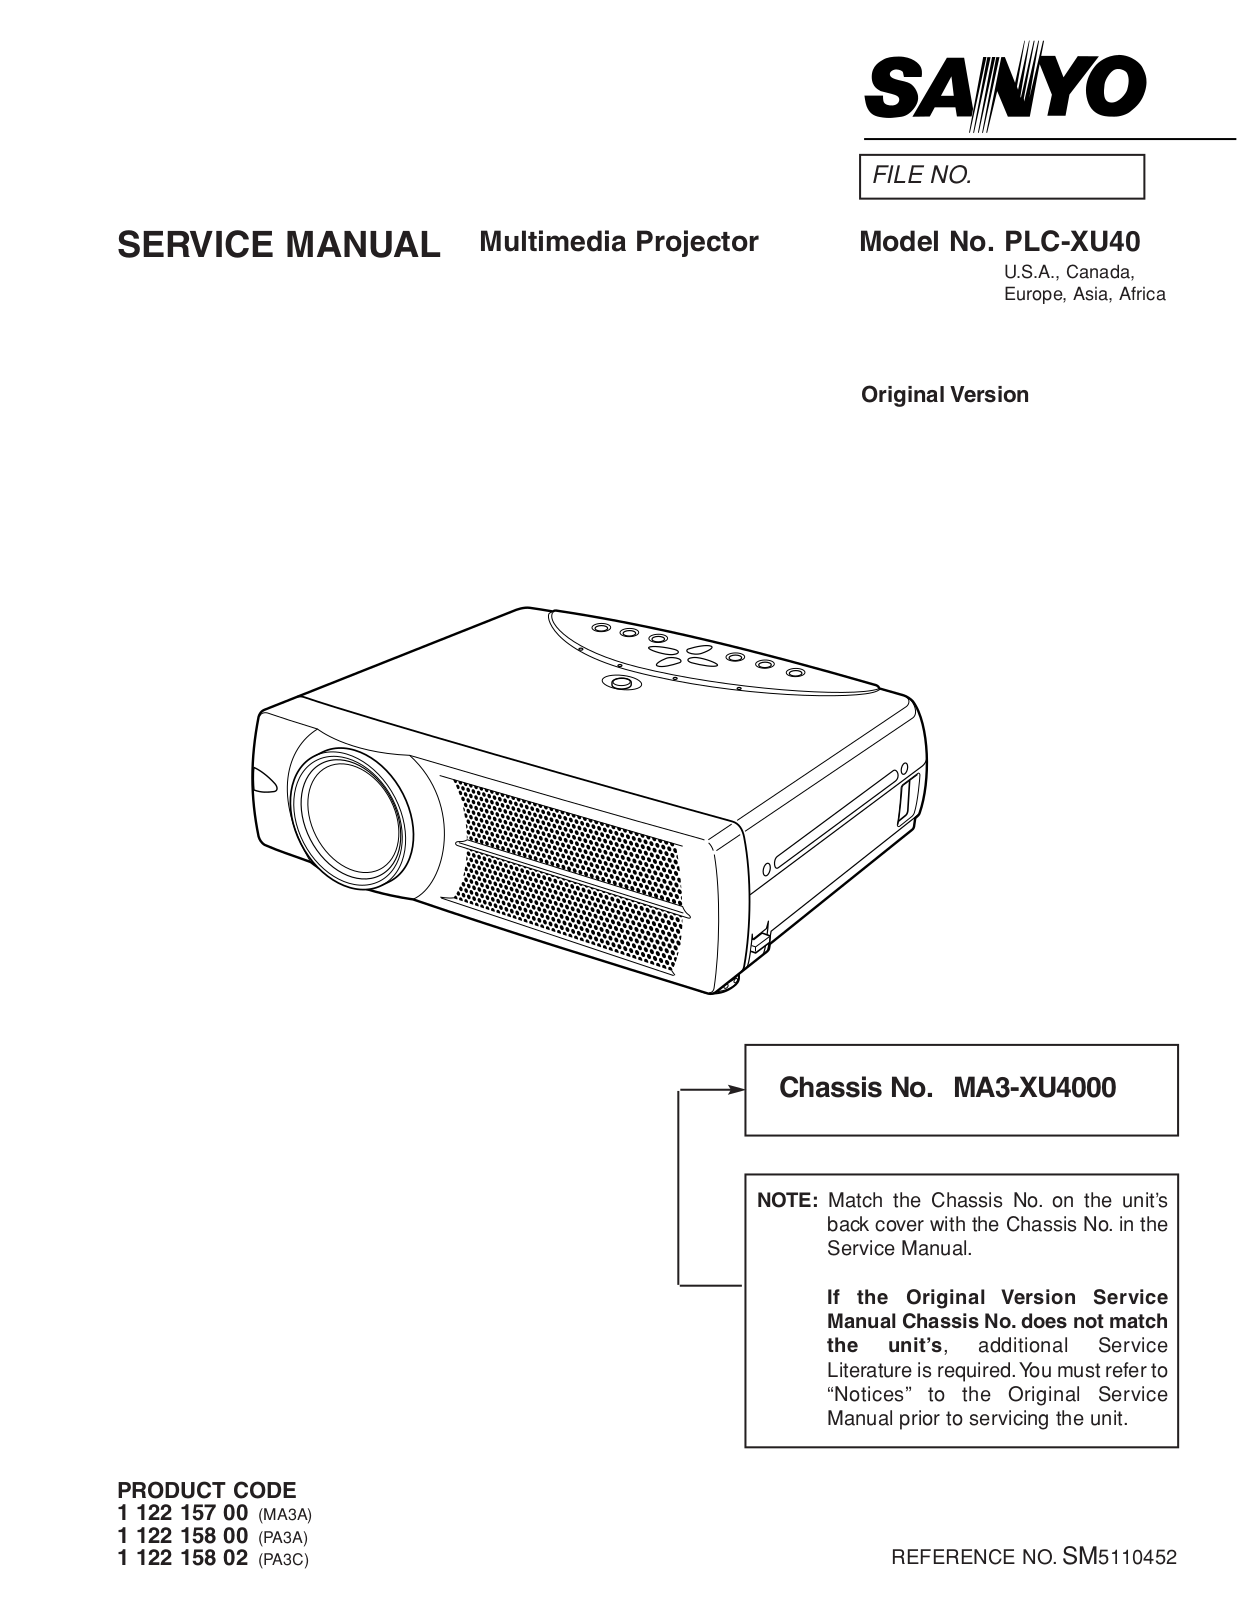 SANYO PLC-XU40 Service Manual